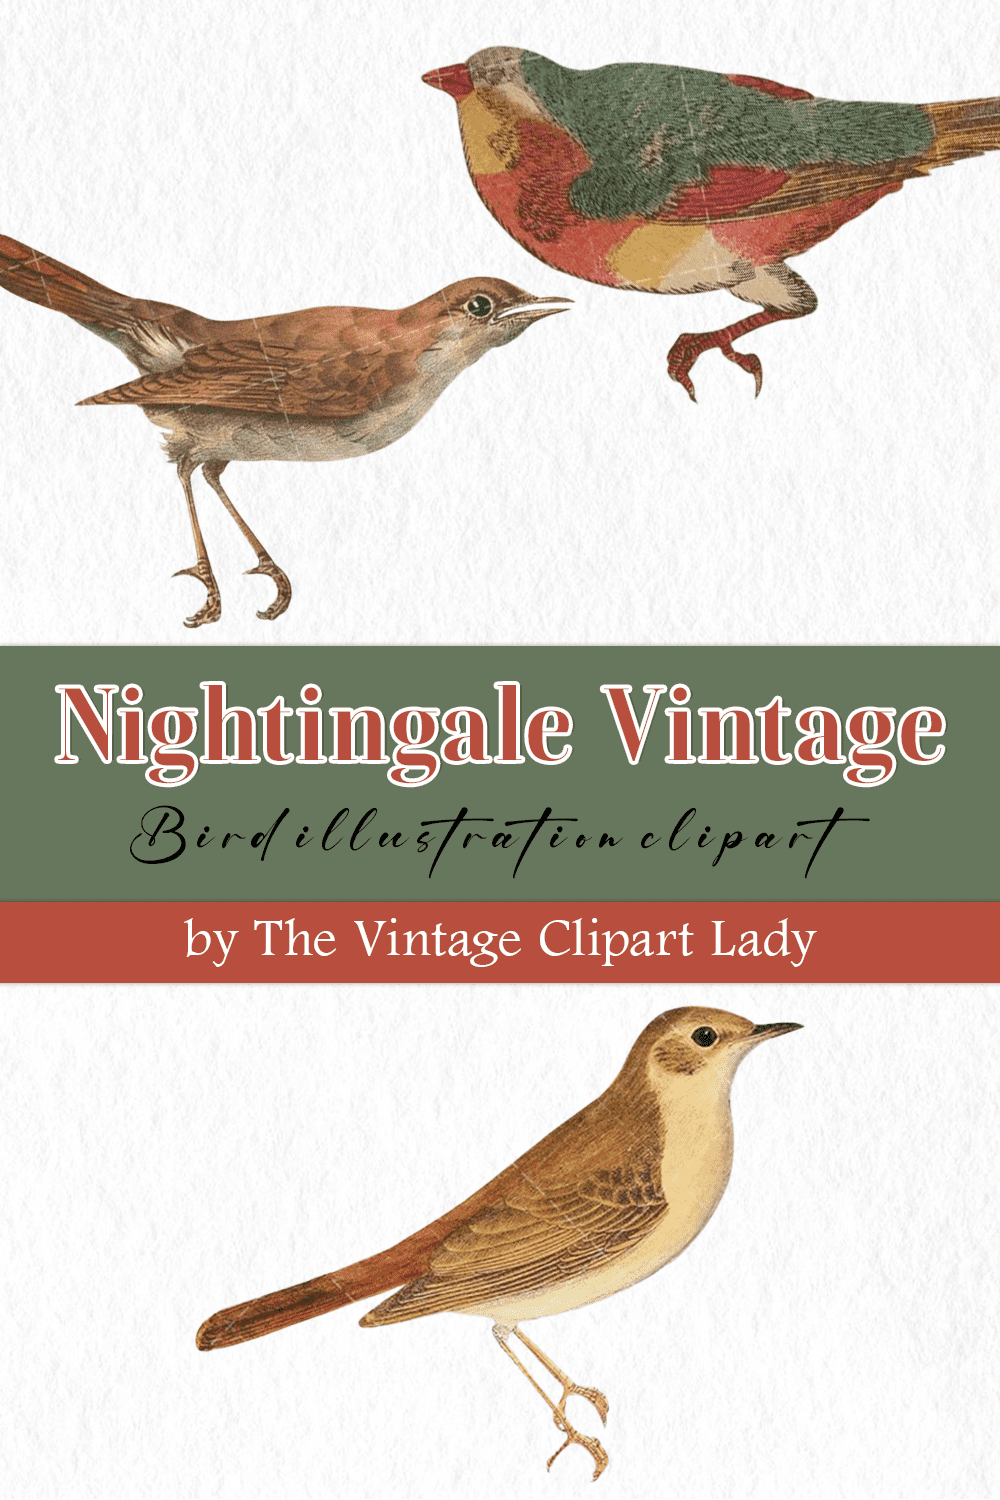 nightingale vintage bird illustration clip art pinterest